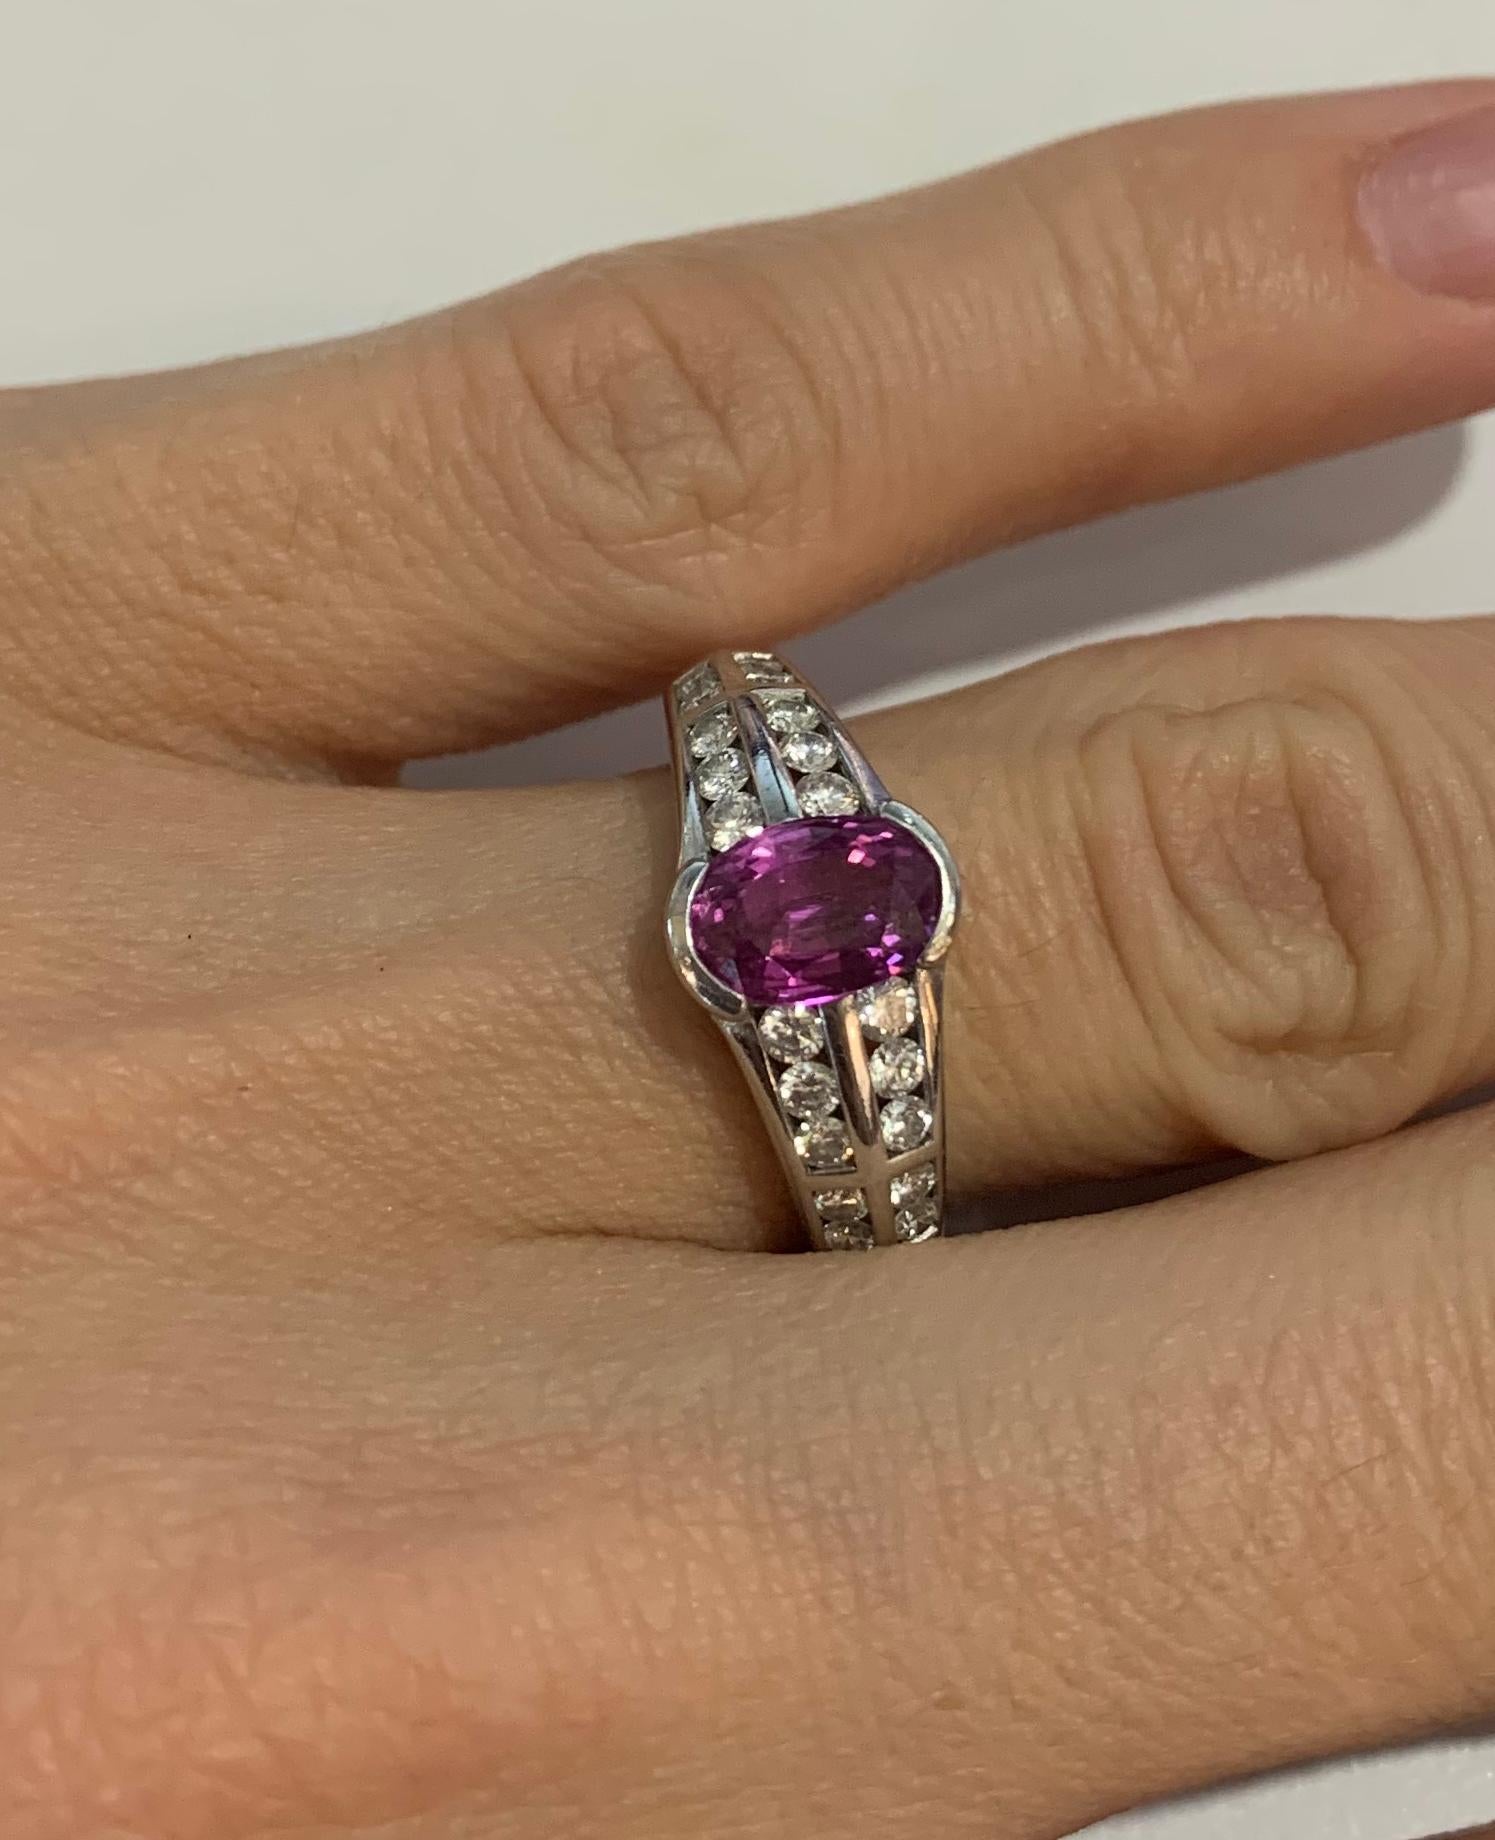 18k White Gold
Ring size: 5.5
Pink Tourmaline
Diamonds: 0.6ct